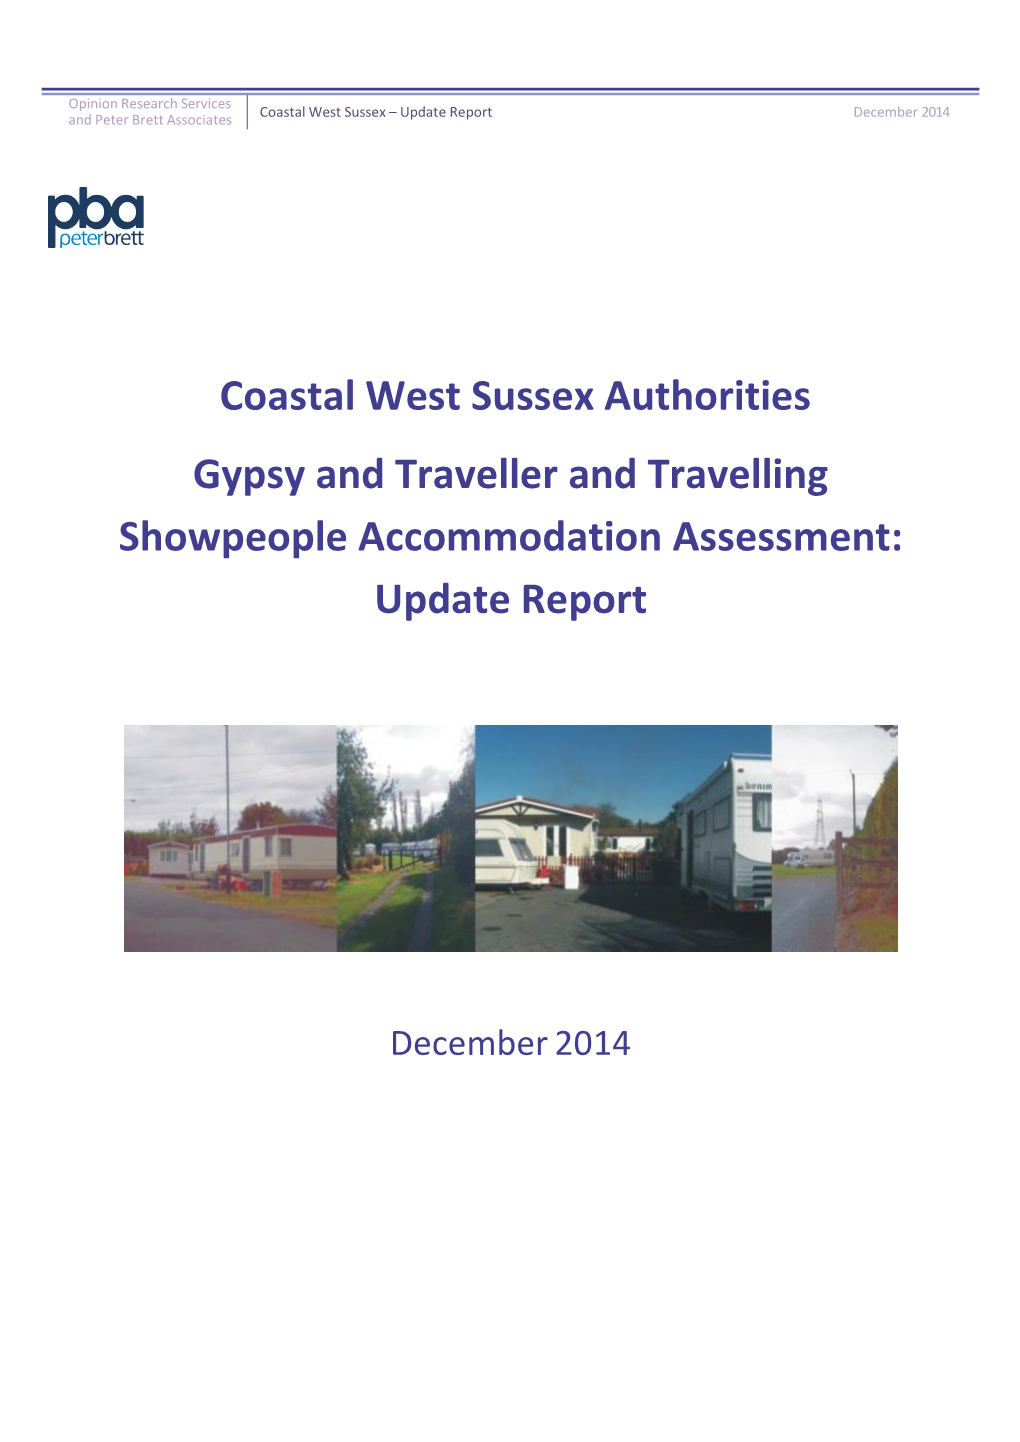 Coastal West Sussex Authorities